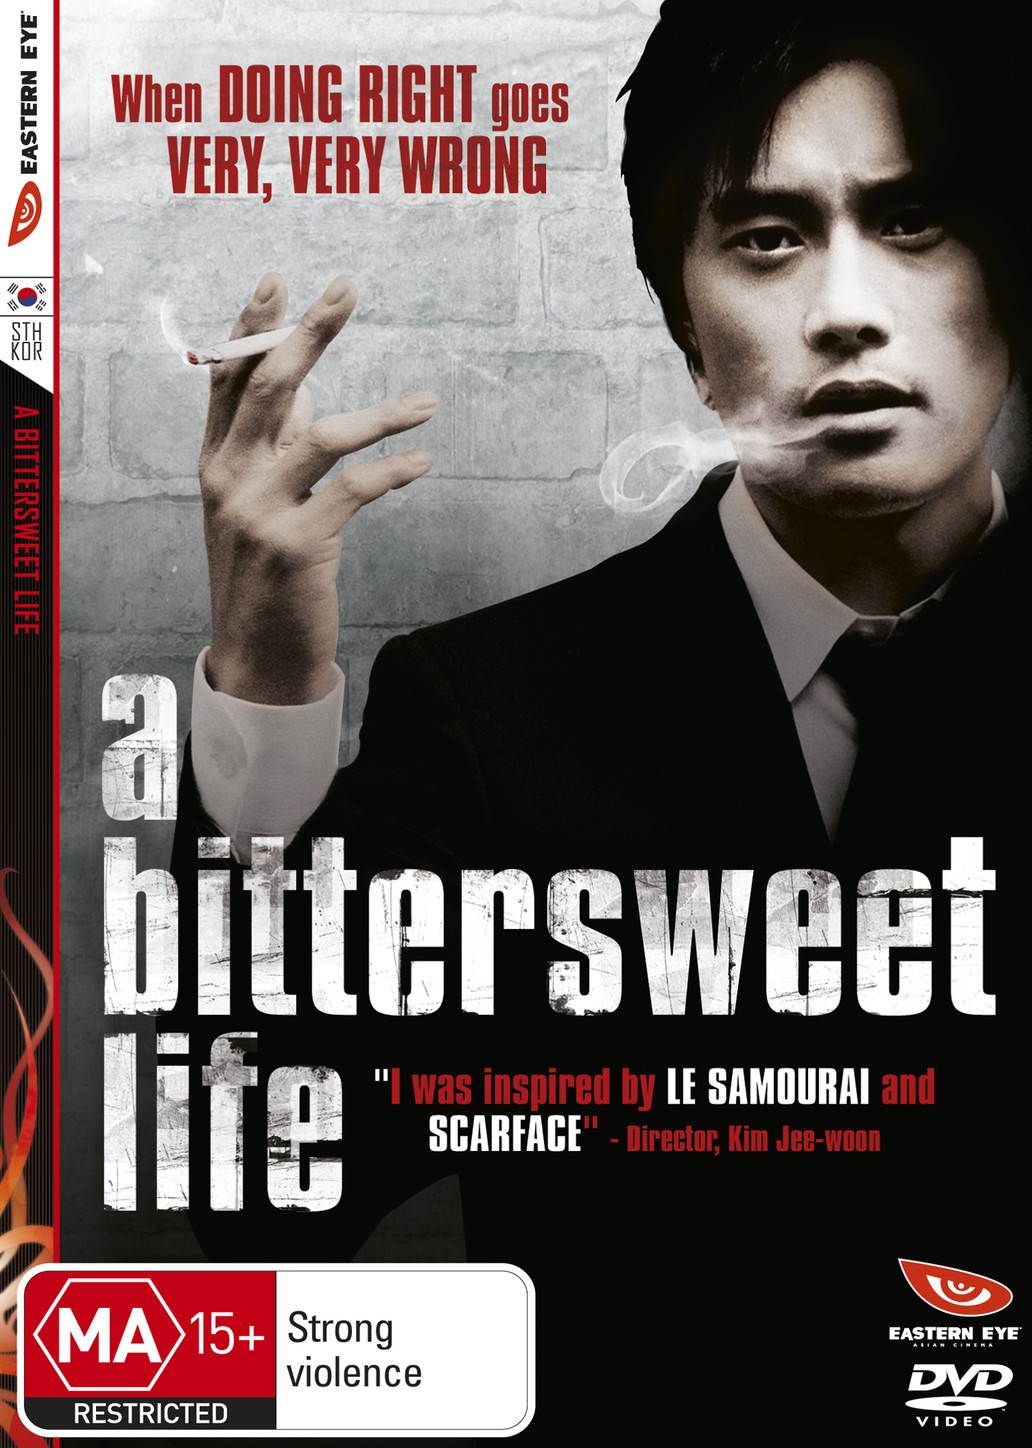 [甜蜜人生].A.Bittersweet.Life.2005.BluRay.1080p.AVC.DTS-HD.MA.5.1-Solitude    44.46G-3.jpg